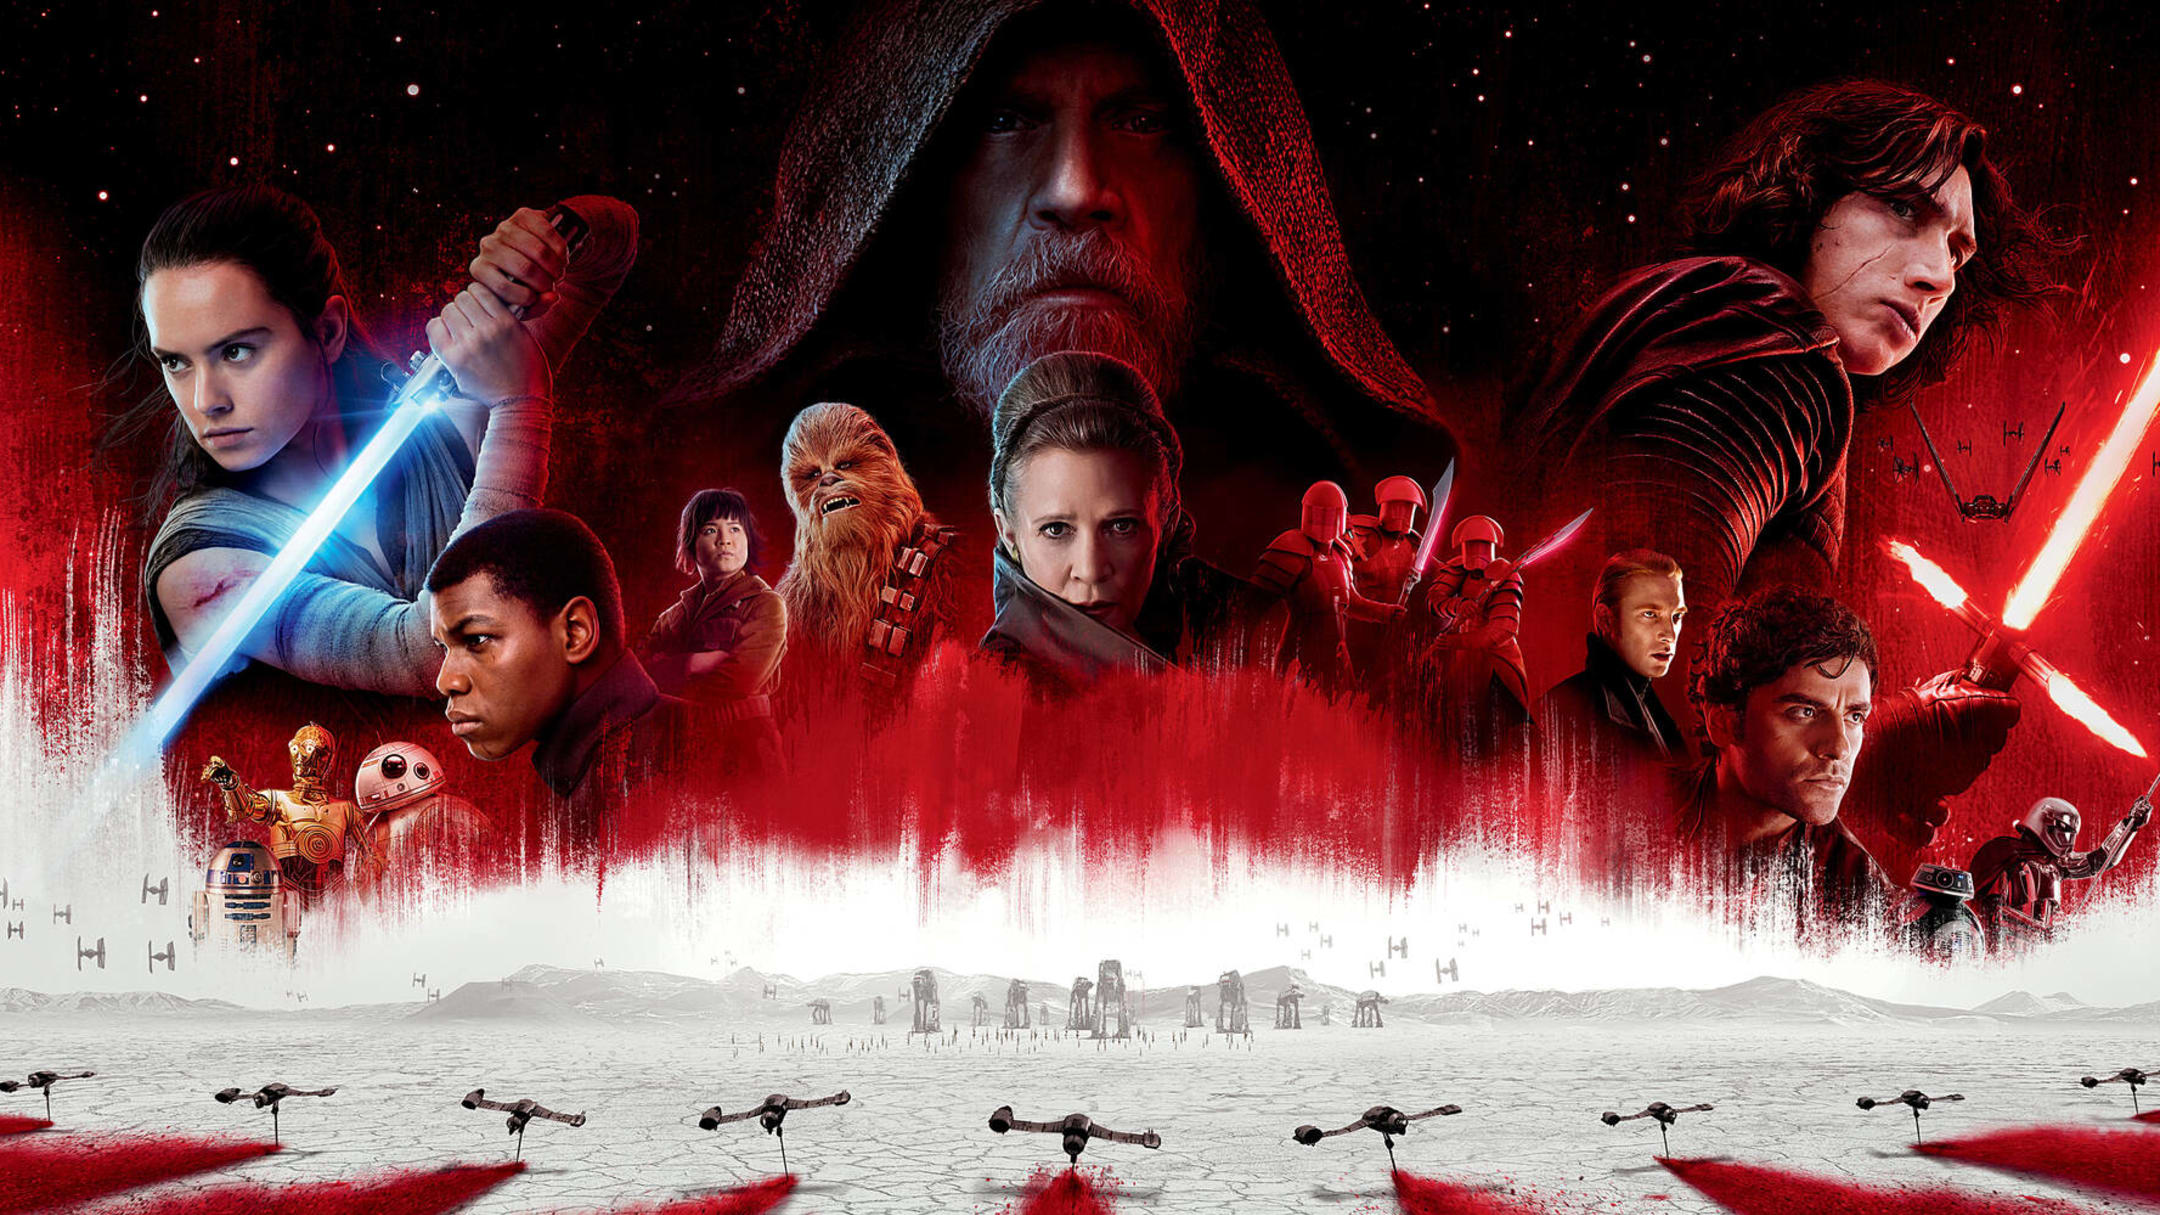 Let's Not Pretend 'Star Wars: The Last Jedi' Isn't A Huge Hit